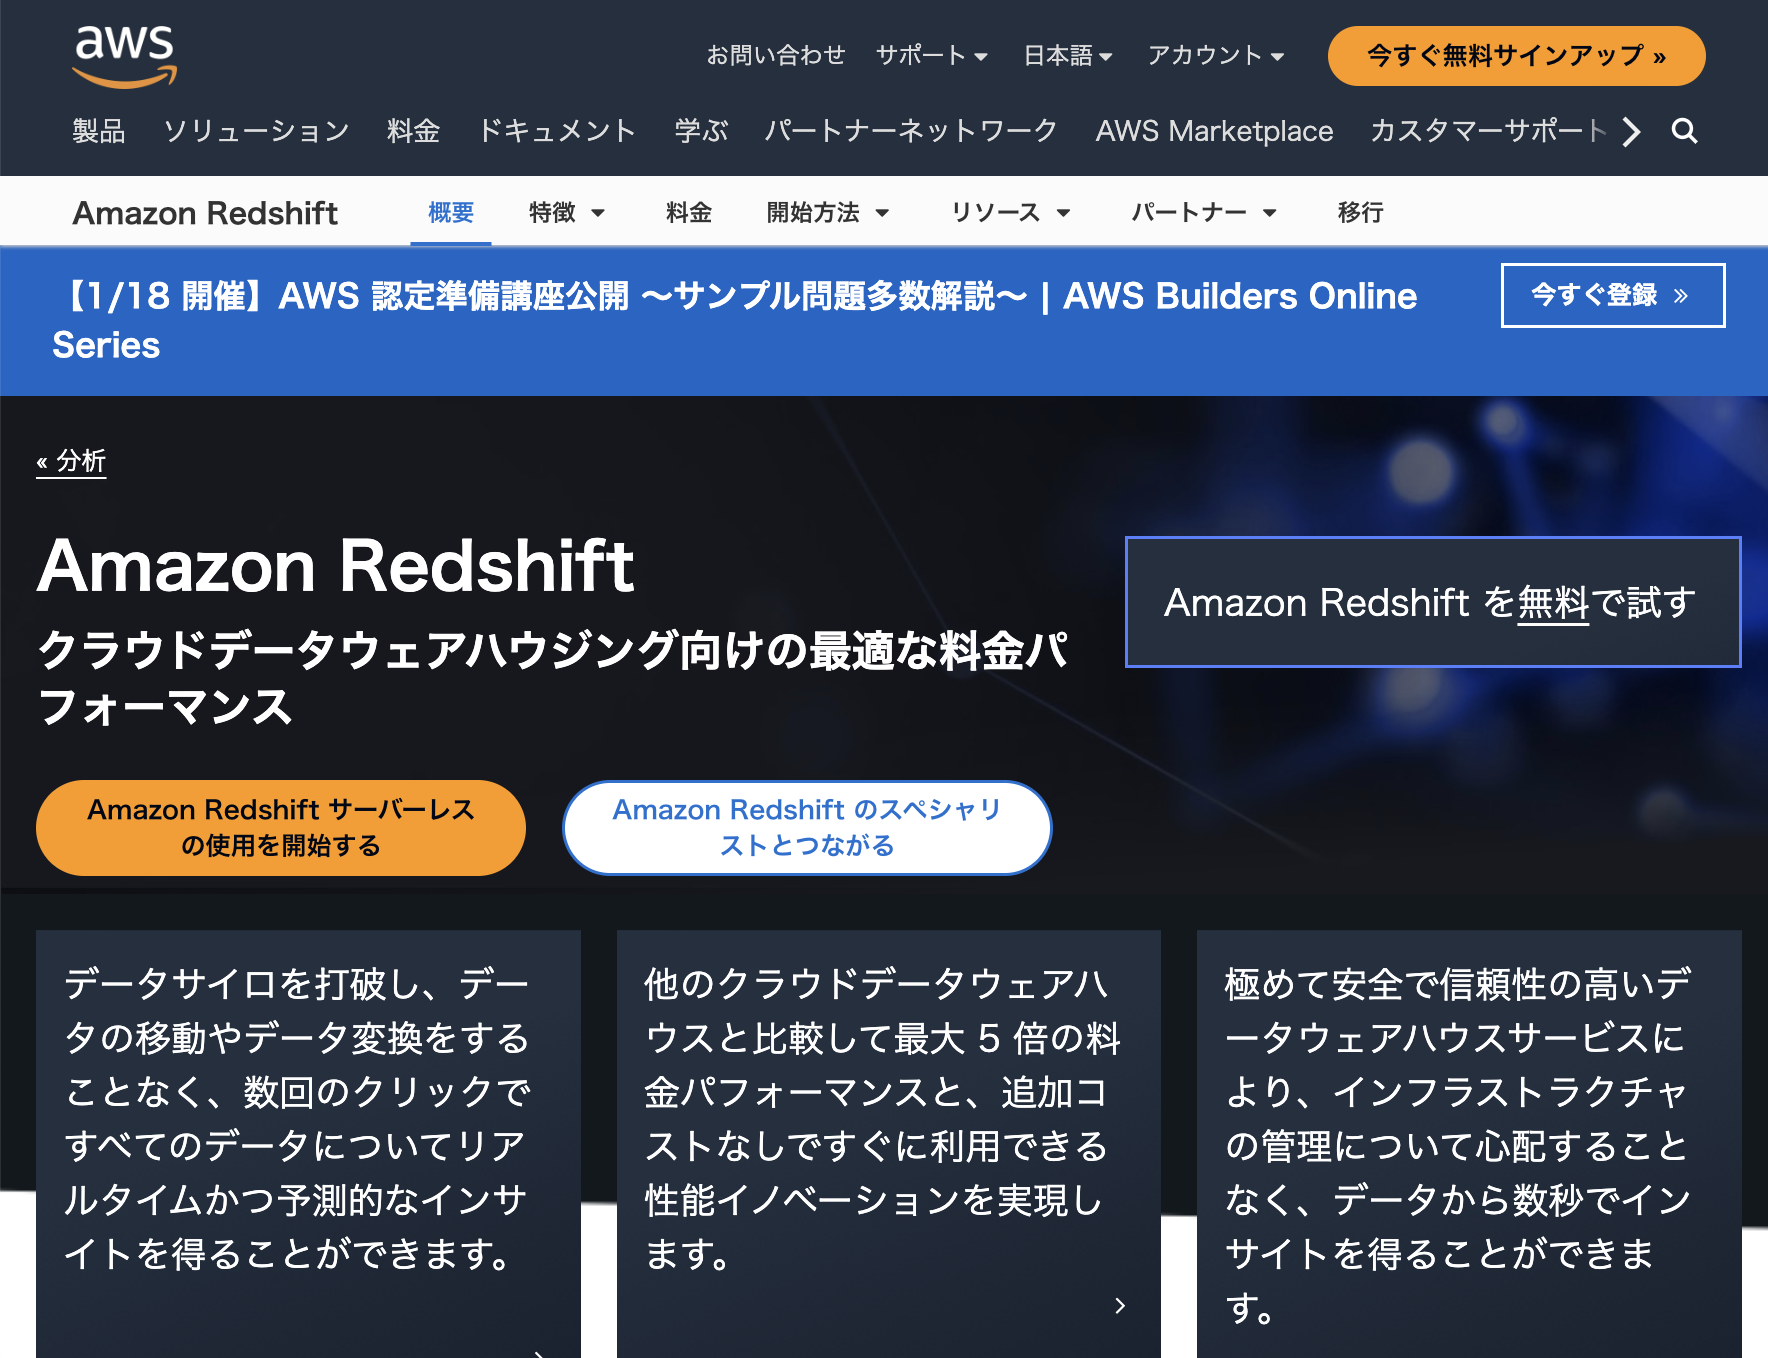  Amazon Redshift